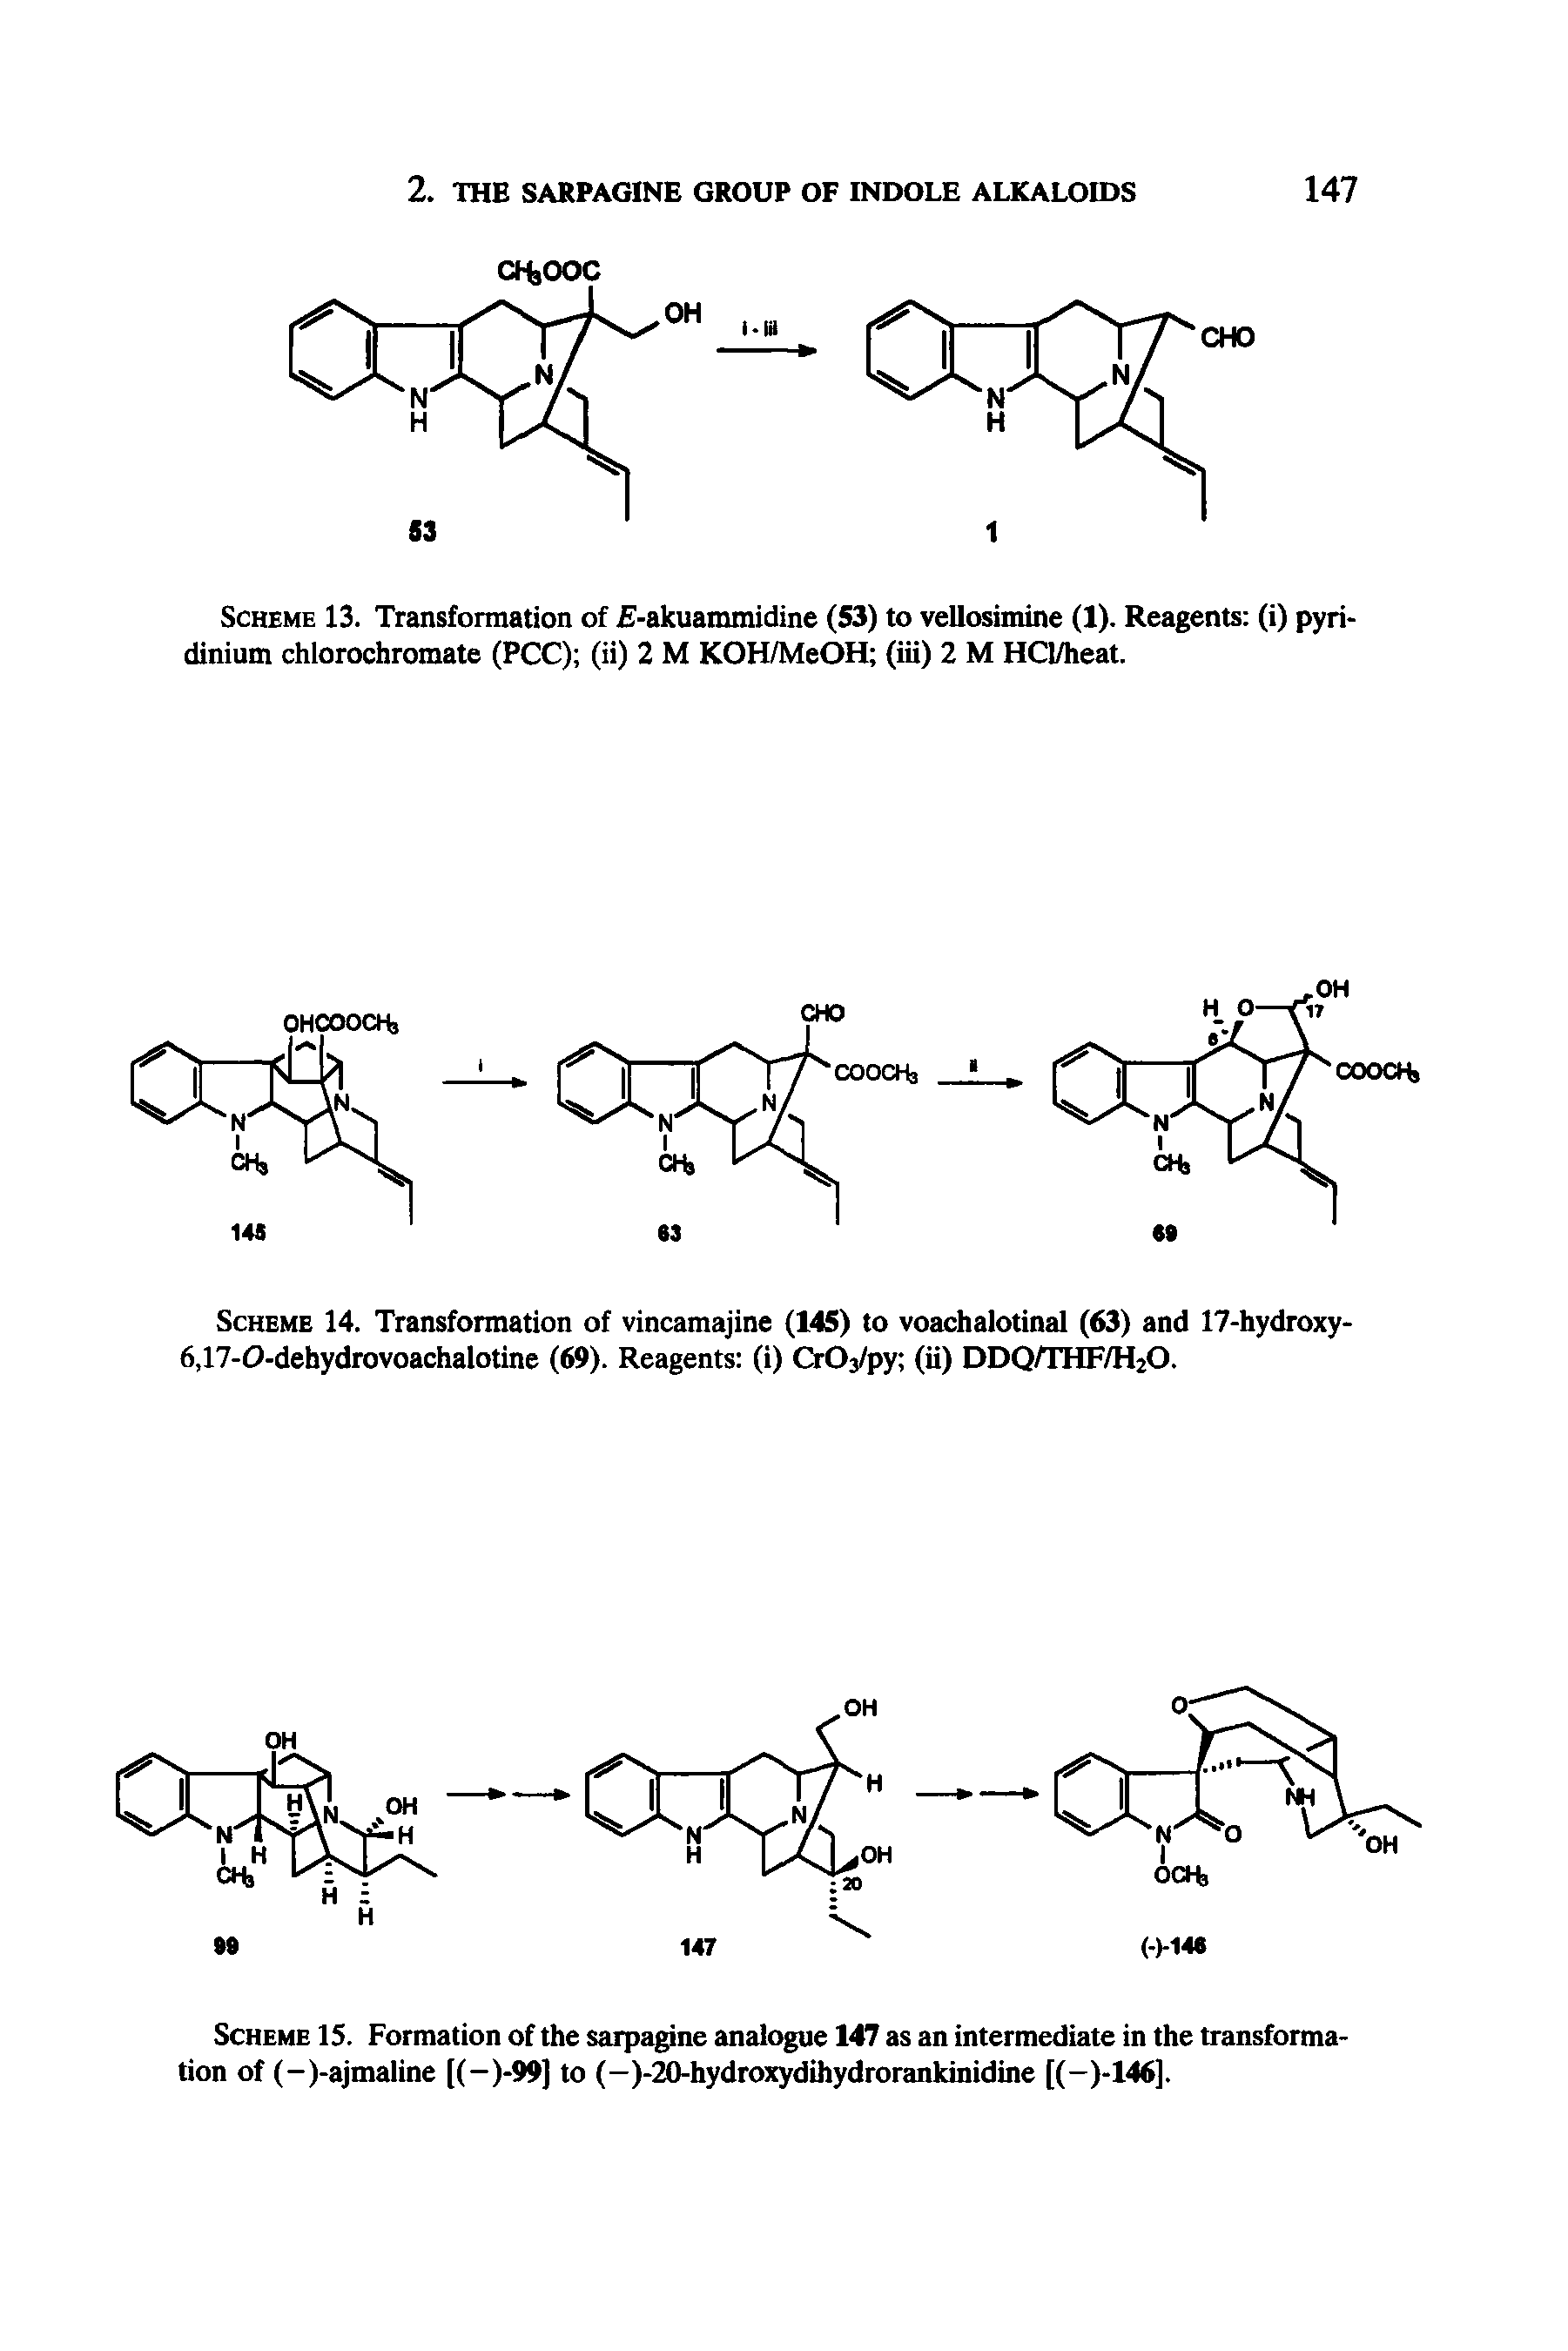 Scheme 14. Transformation of vincamajine (145) to voachalotinal (63) and 17-hydroxy-6,17-O-dehydrovoachalotine (69). Reagents (i) CrOj/py (ii) DDQ/THF/H20.